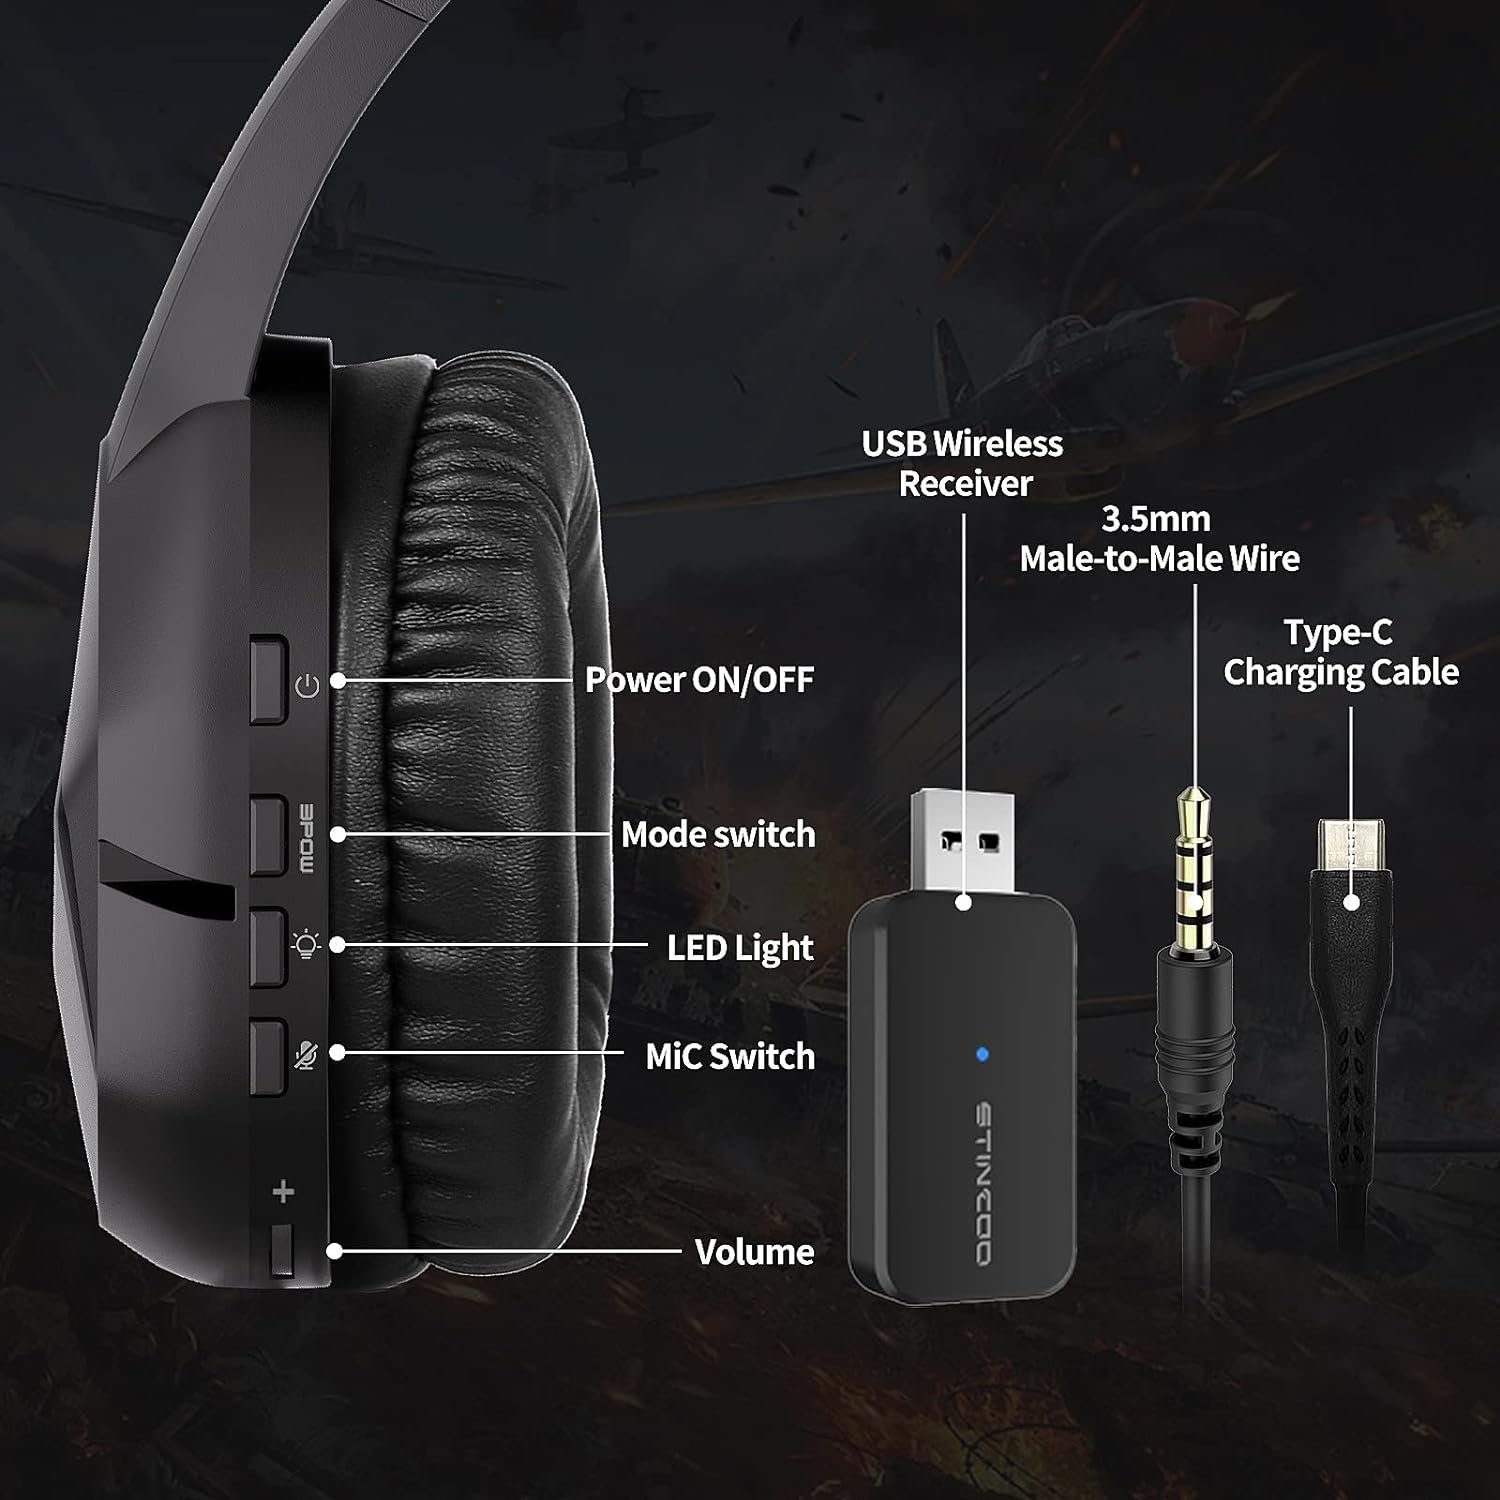 Somic GS401 und PS5 Gaming-Headset: mit , PC) für LED-Beleuchtung. 2.4G/Bluetooth Gaming-Headset Mikrofon Kabelloses (Abnehmbares PS4, einsetzbar. hoher Klangqualität Flexibel &